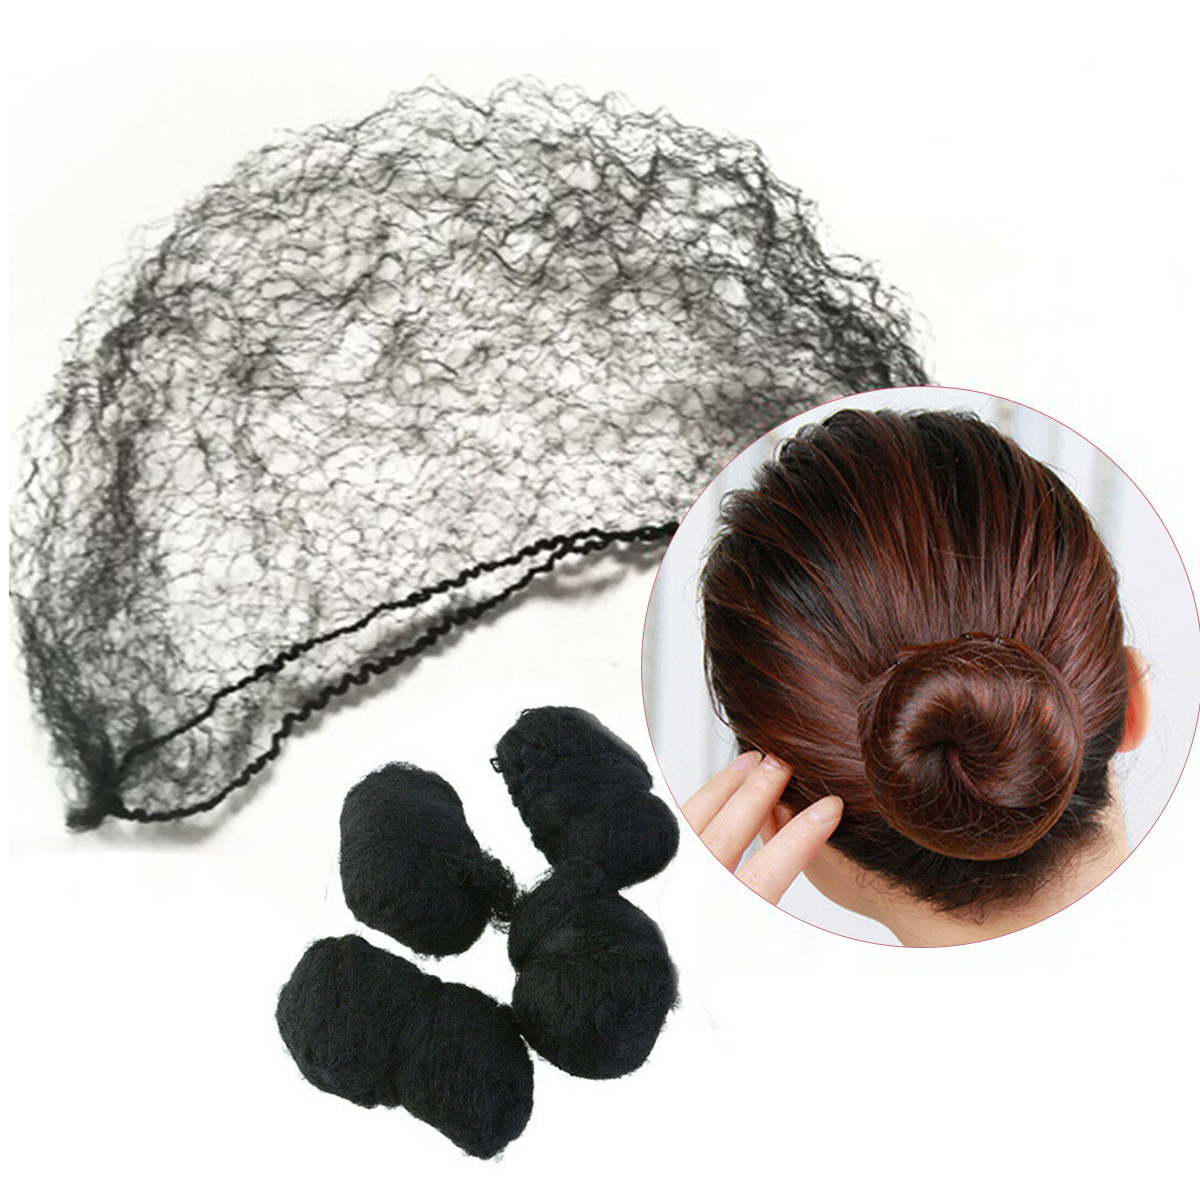 Details about   100pcs Invisible Black Hair Nets Elastic Edge Mesh Hairnet Stretch Hairnet Cover